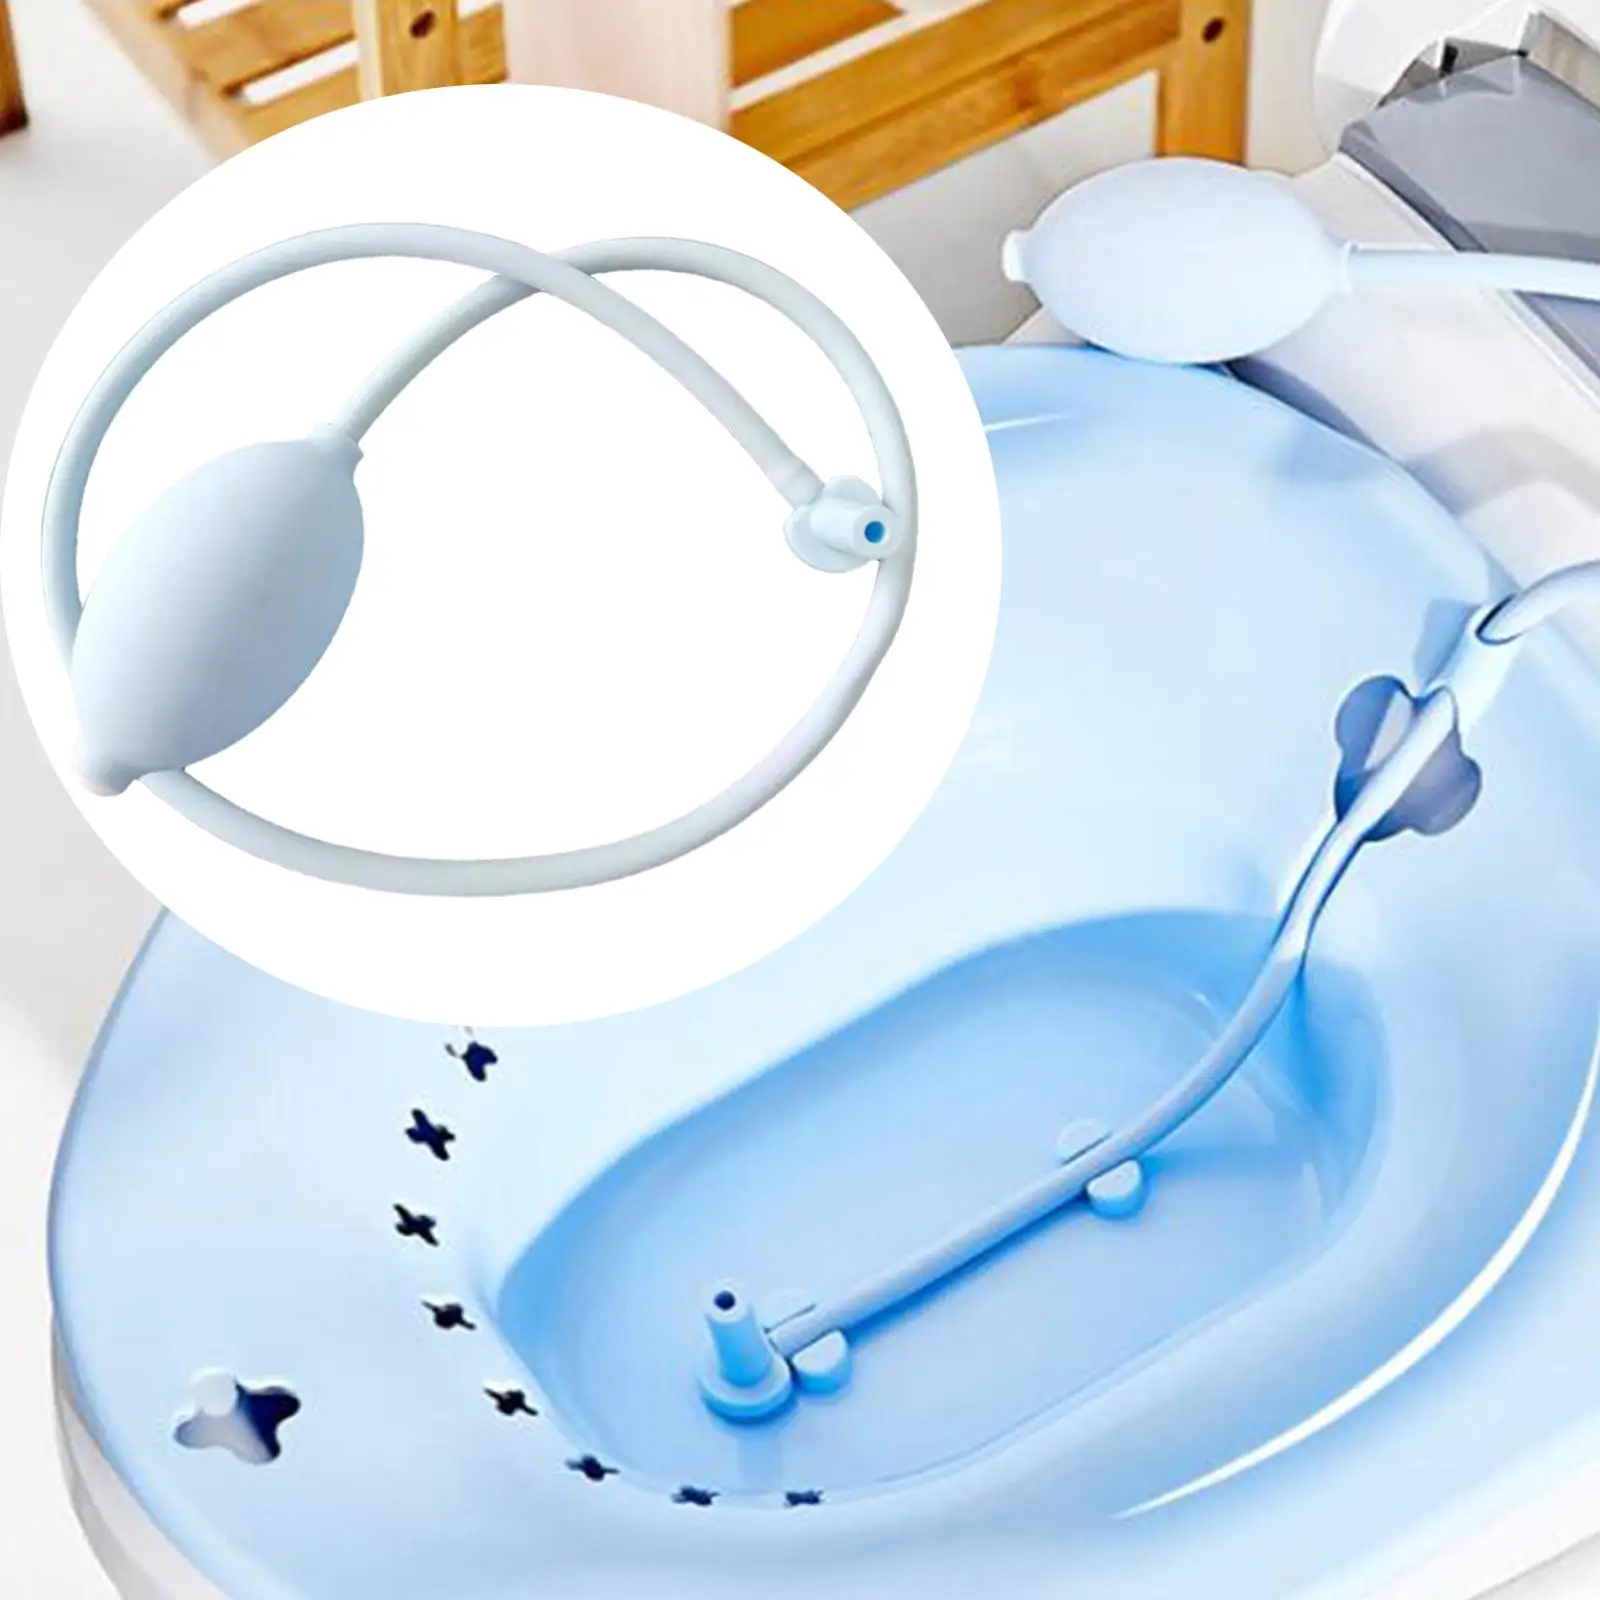 Sitz Bath Flusher Soaking Cleaning Easy to Store Hand Sprayer for Bidet Toilet Bathtub Wash Basin Hemorrhoid Postpartum Care